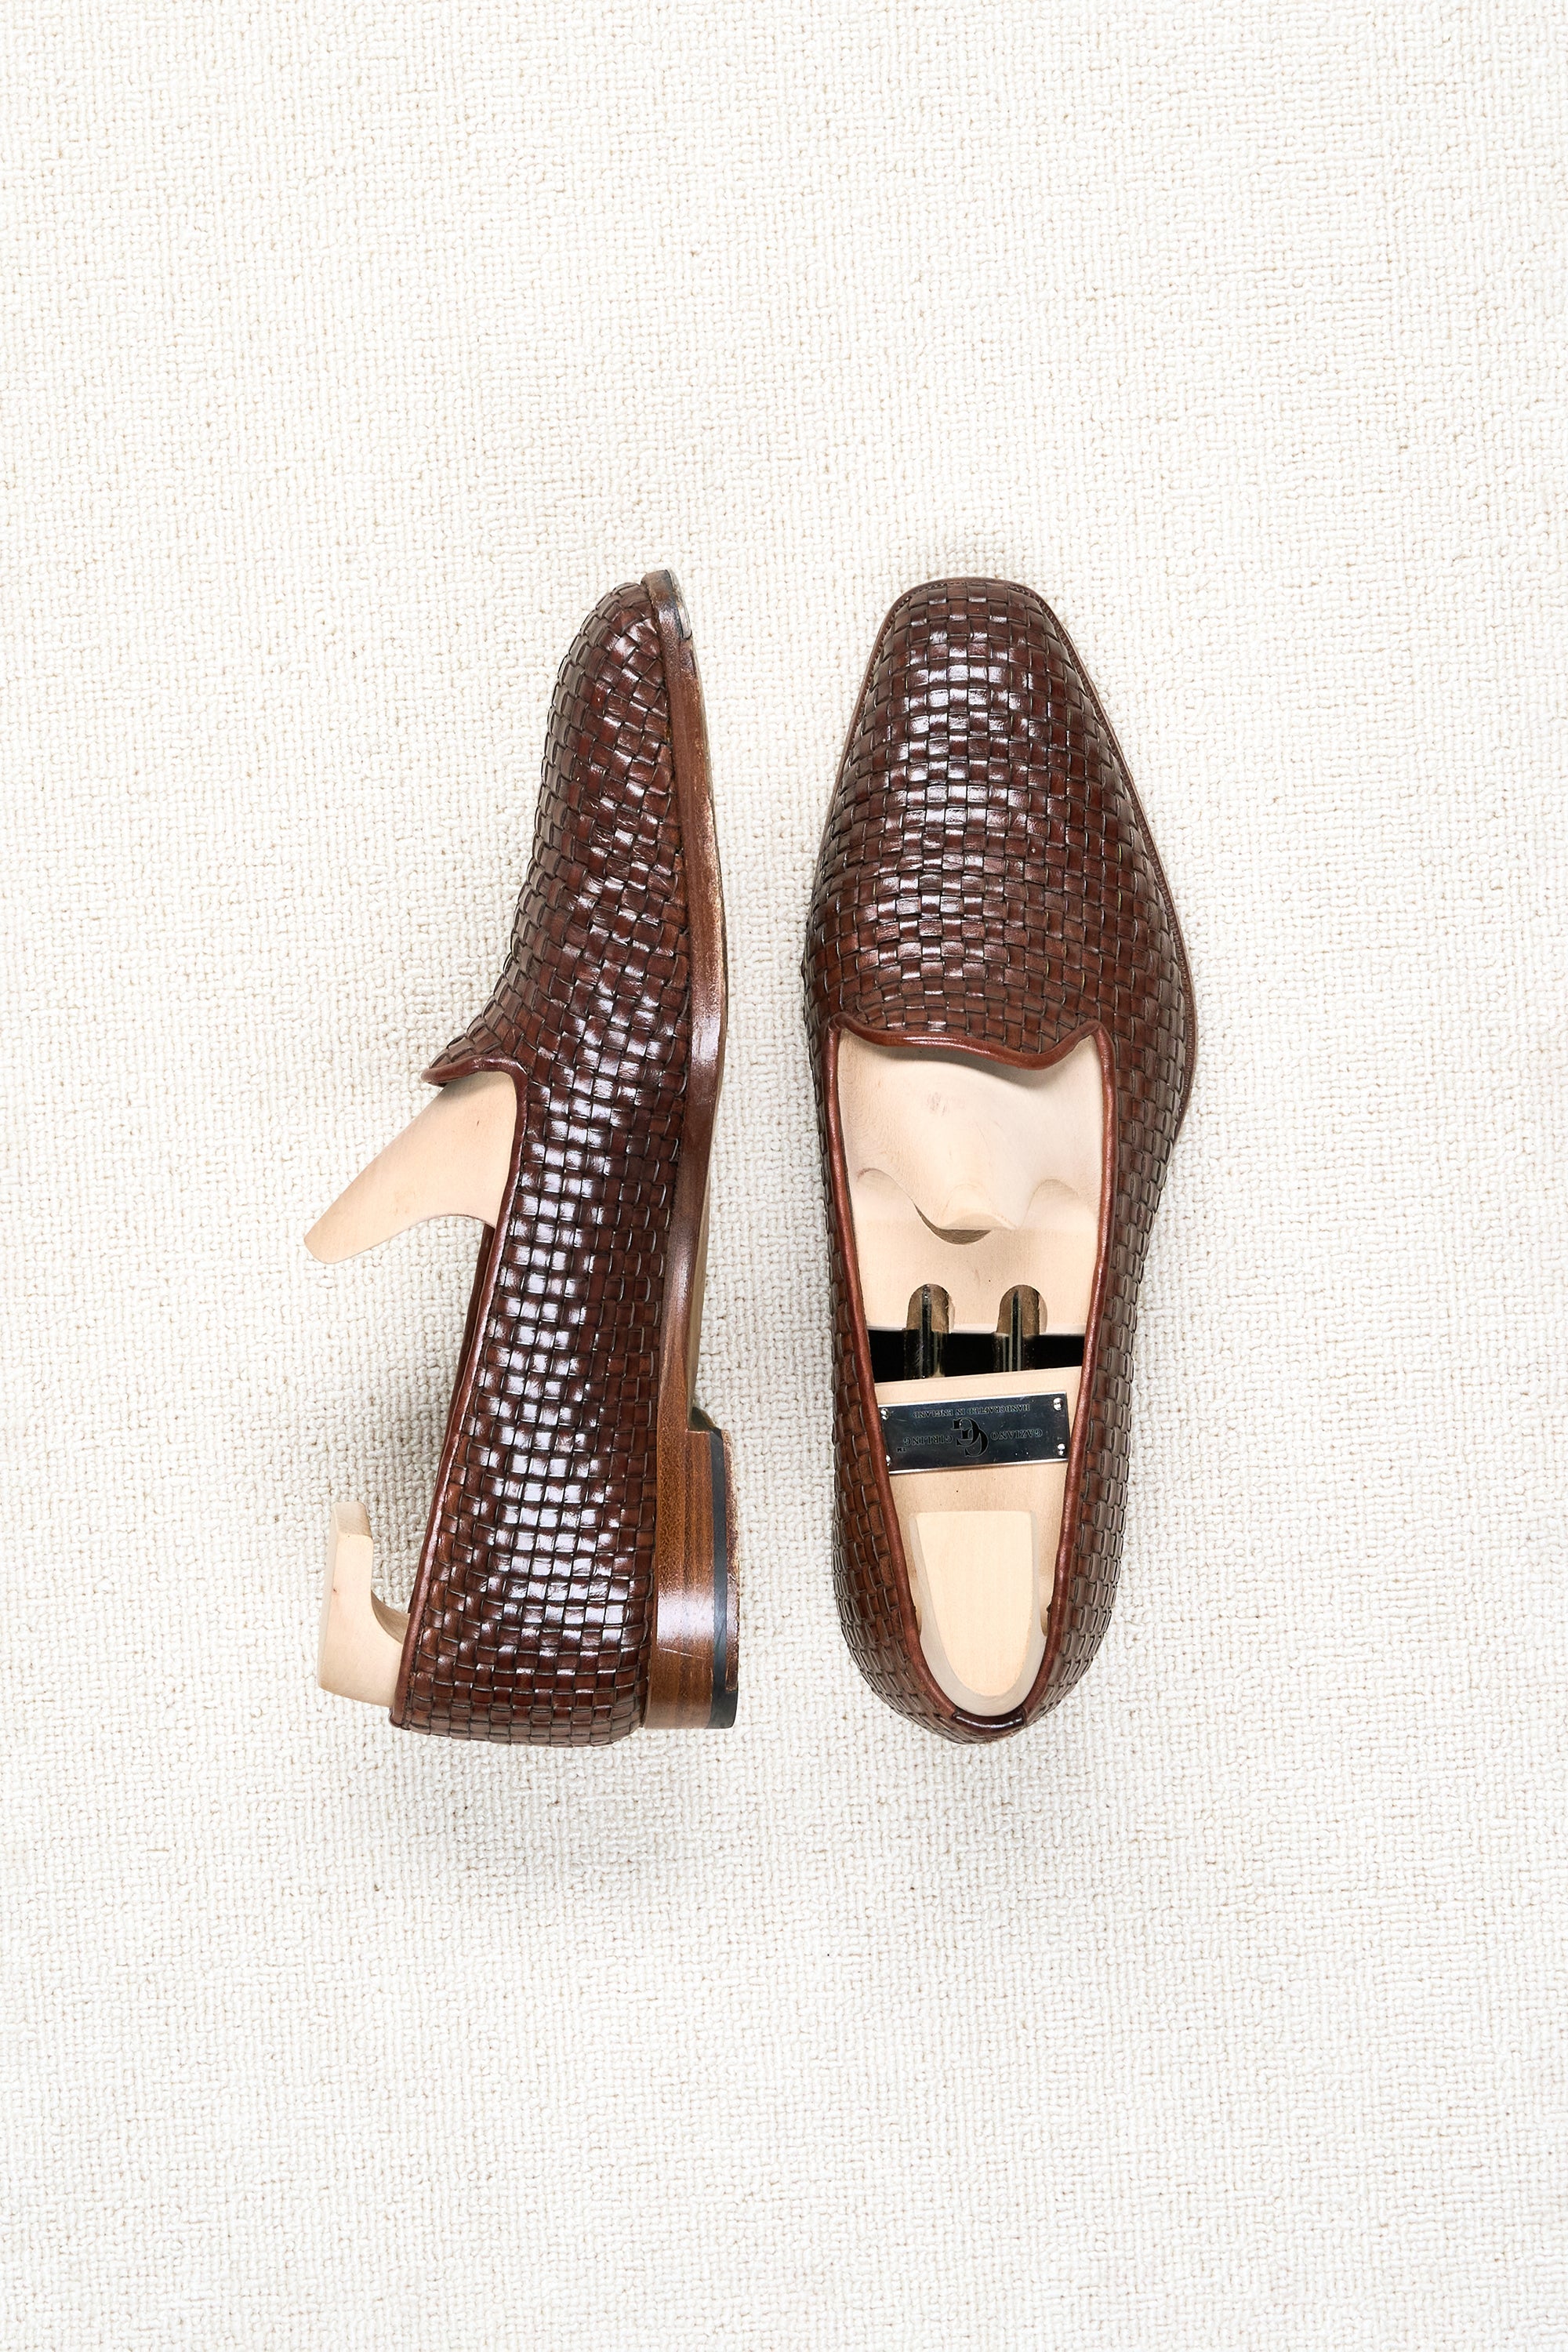 Gaziano & Girling "Amalfi" Dark Brown SL14 Woven Calf Loafers MTO